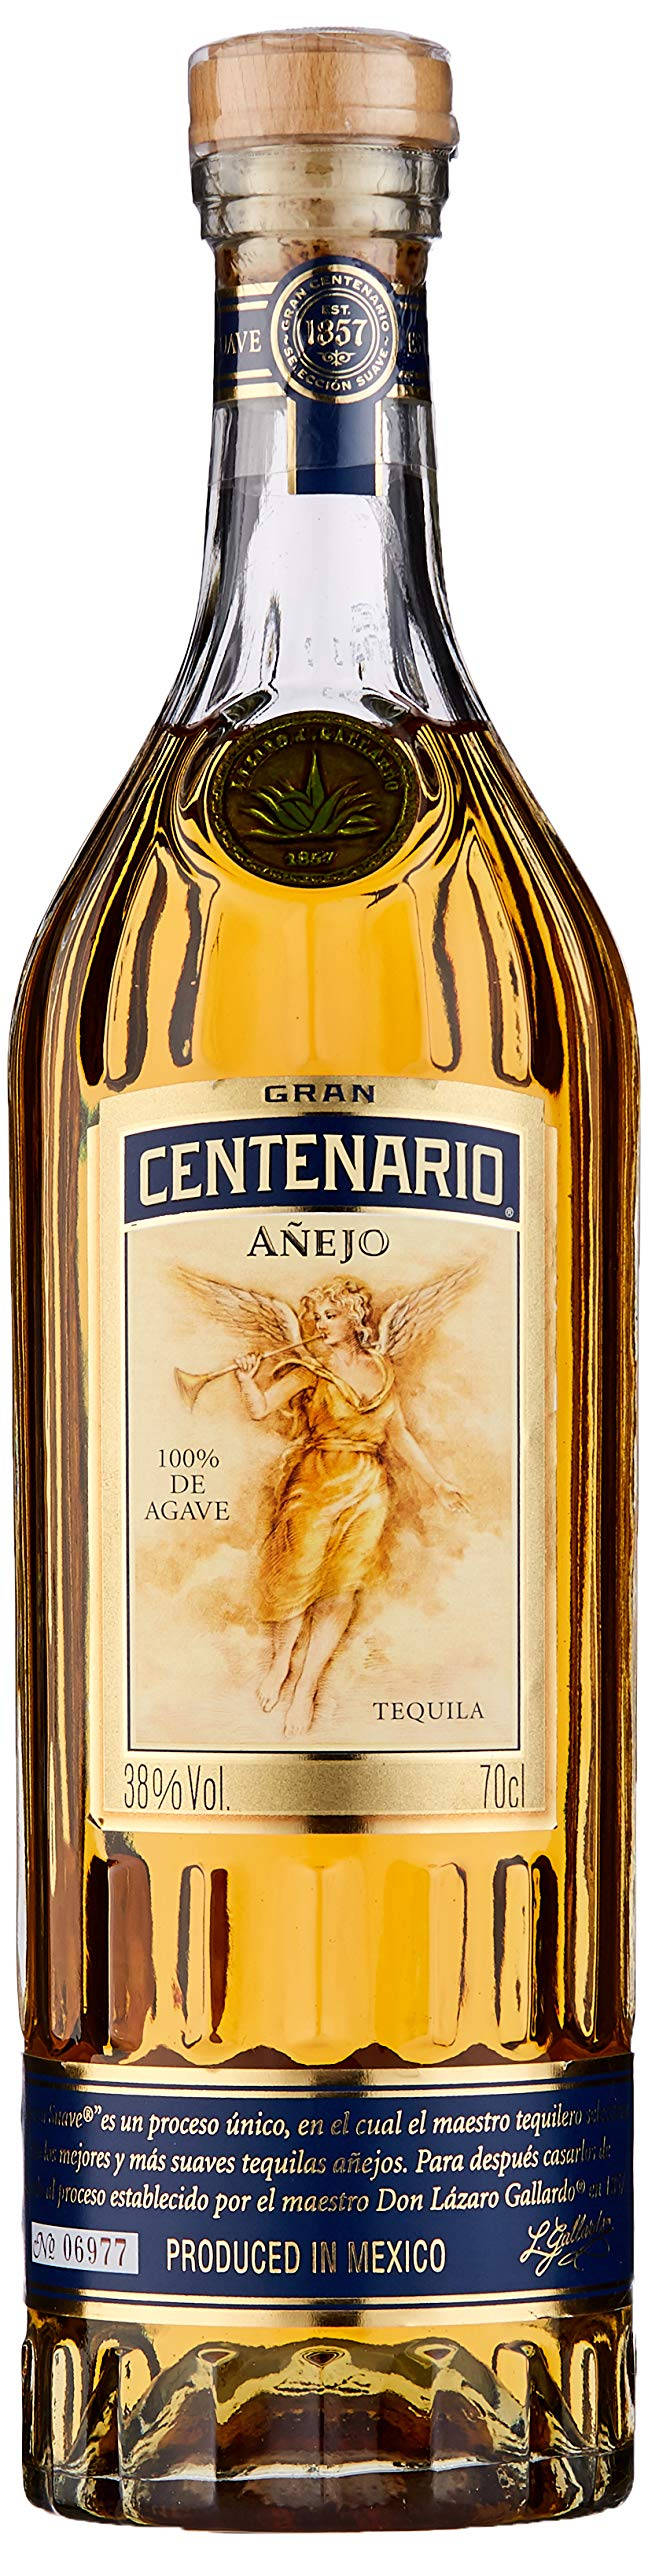 Grancentenario Tequila Añejo Flasche Wallpaper